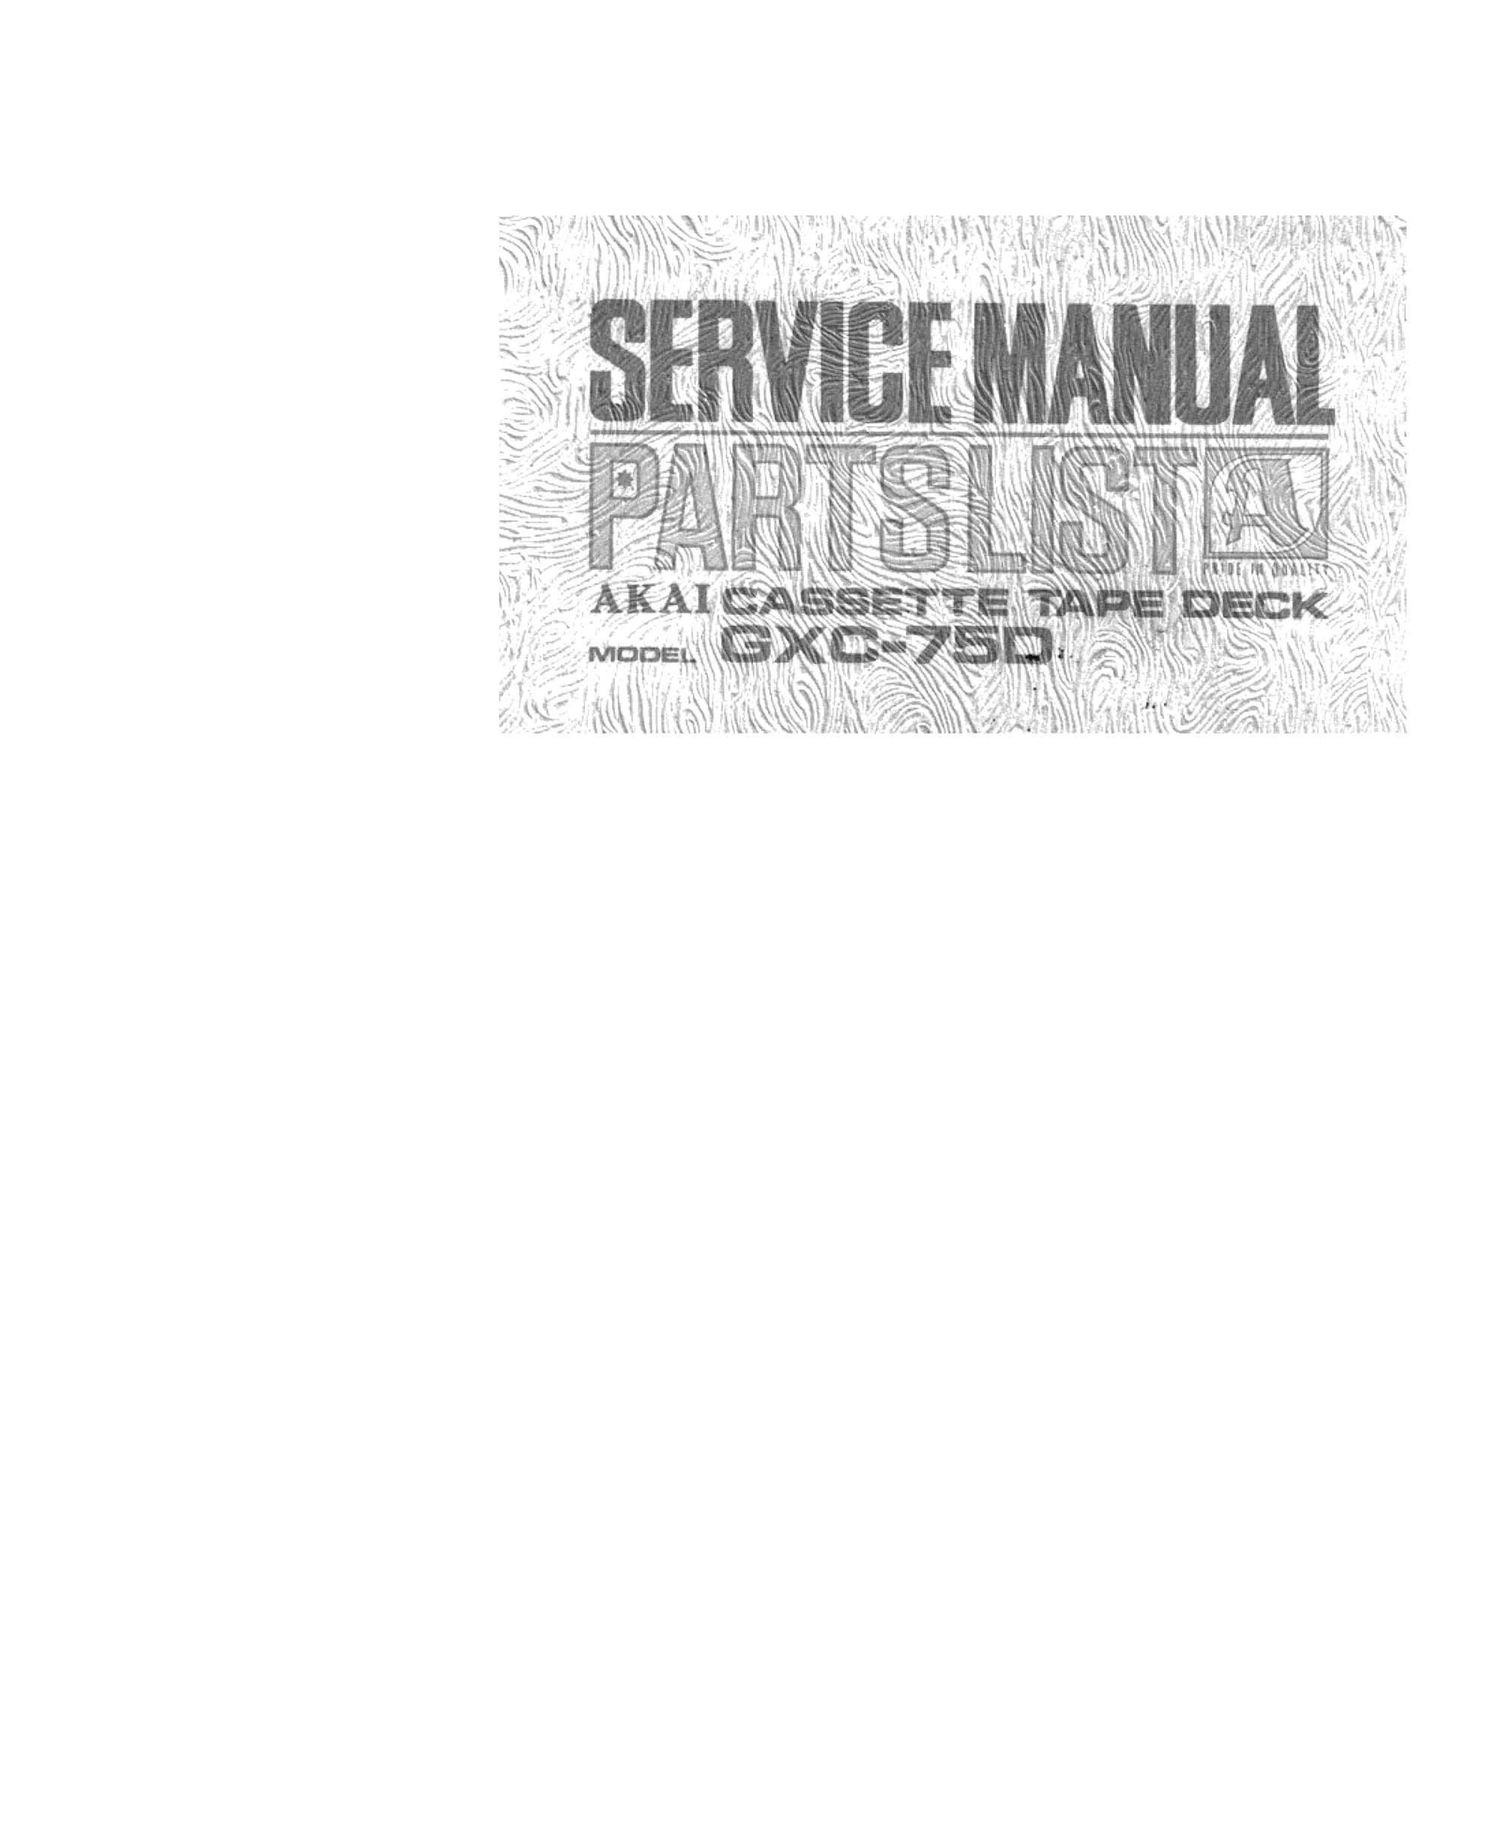 Akai GXC 75 D Service Manual